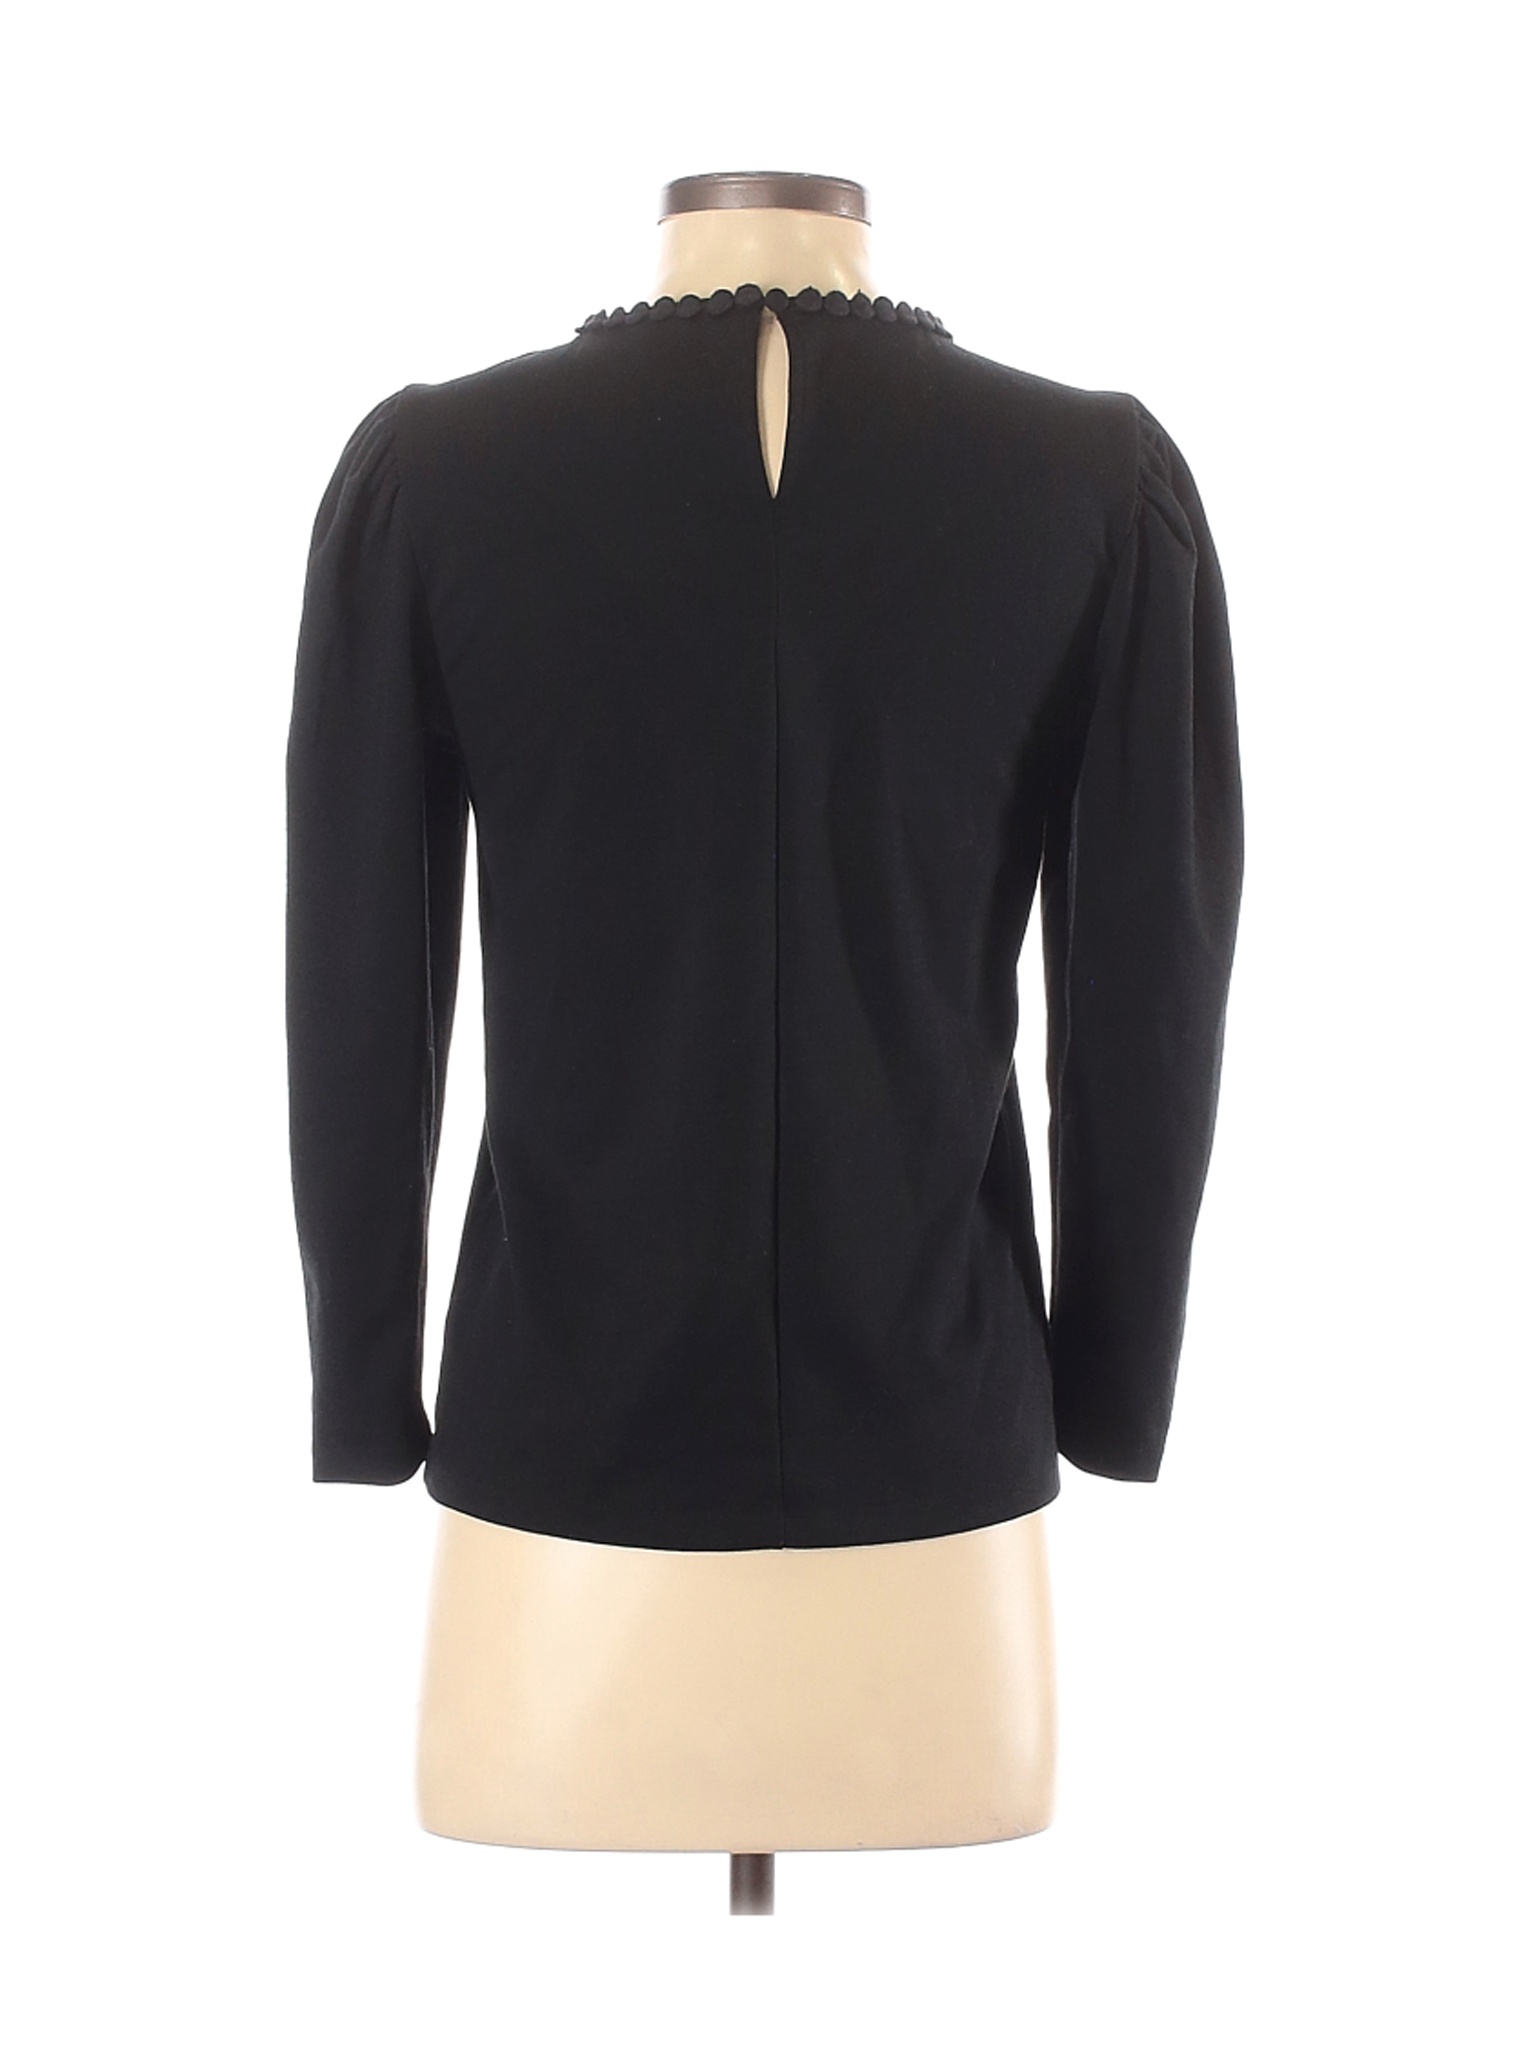 Ann Taylor Women Black Long Sleeve Top XS | eBay